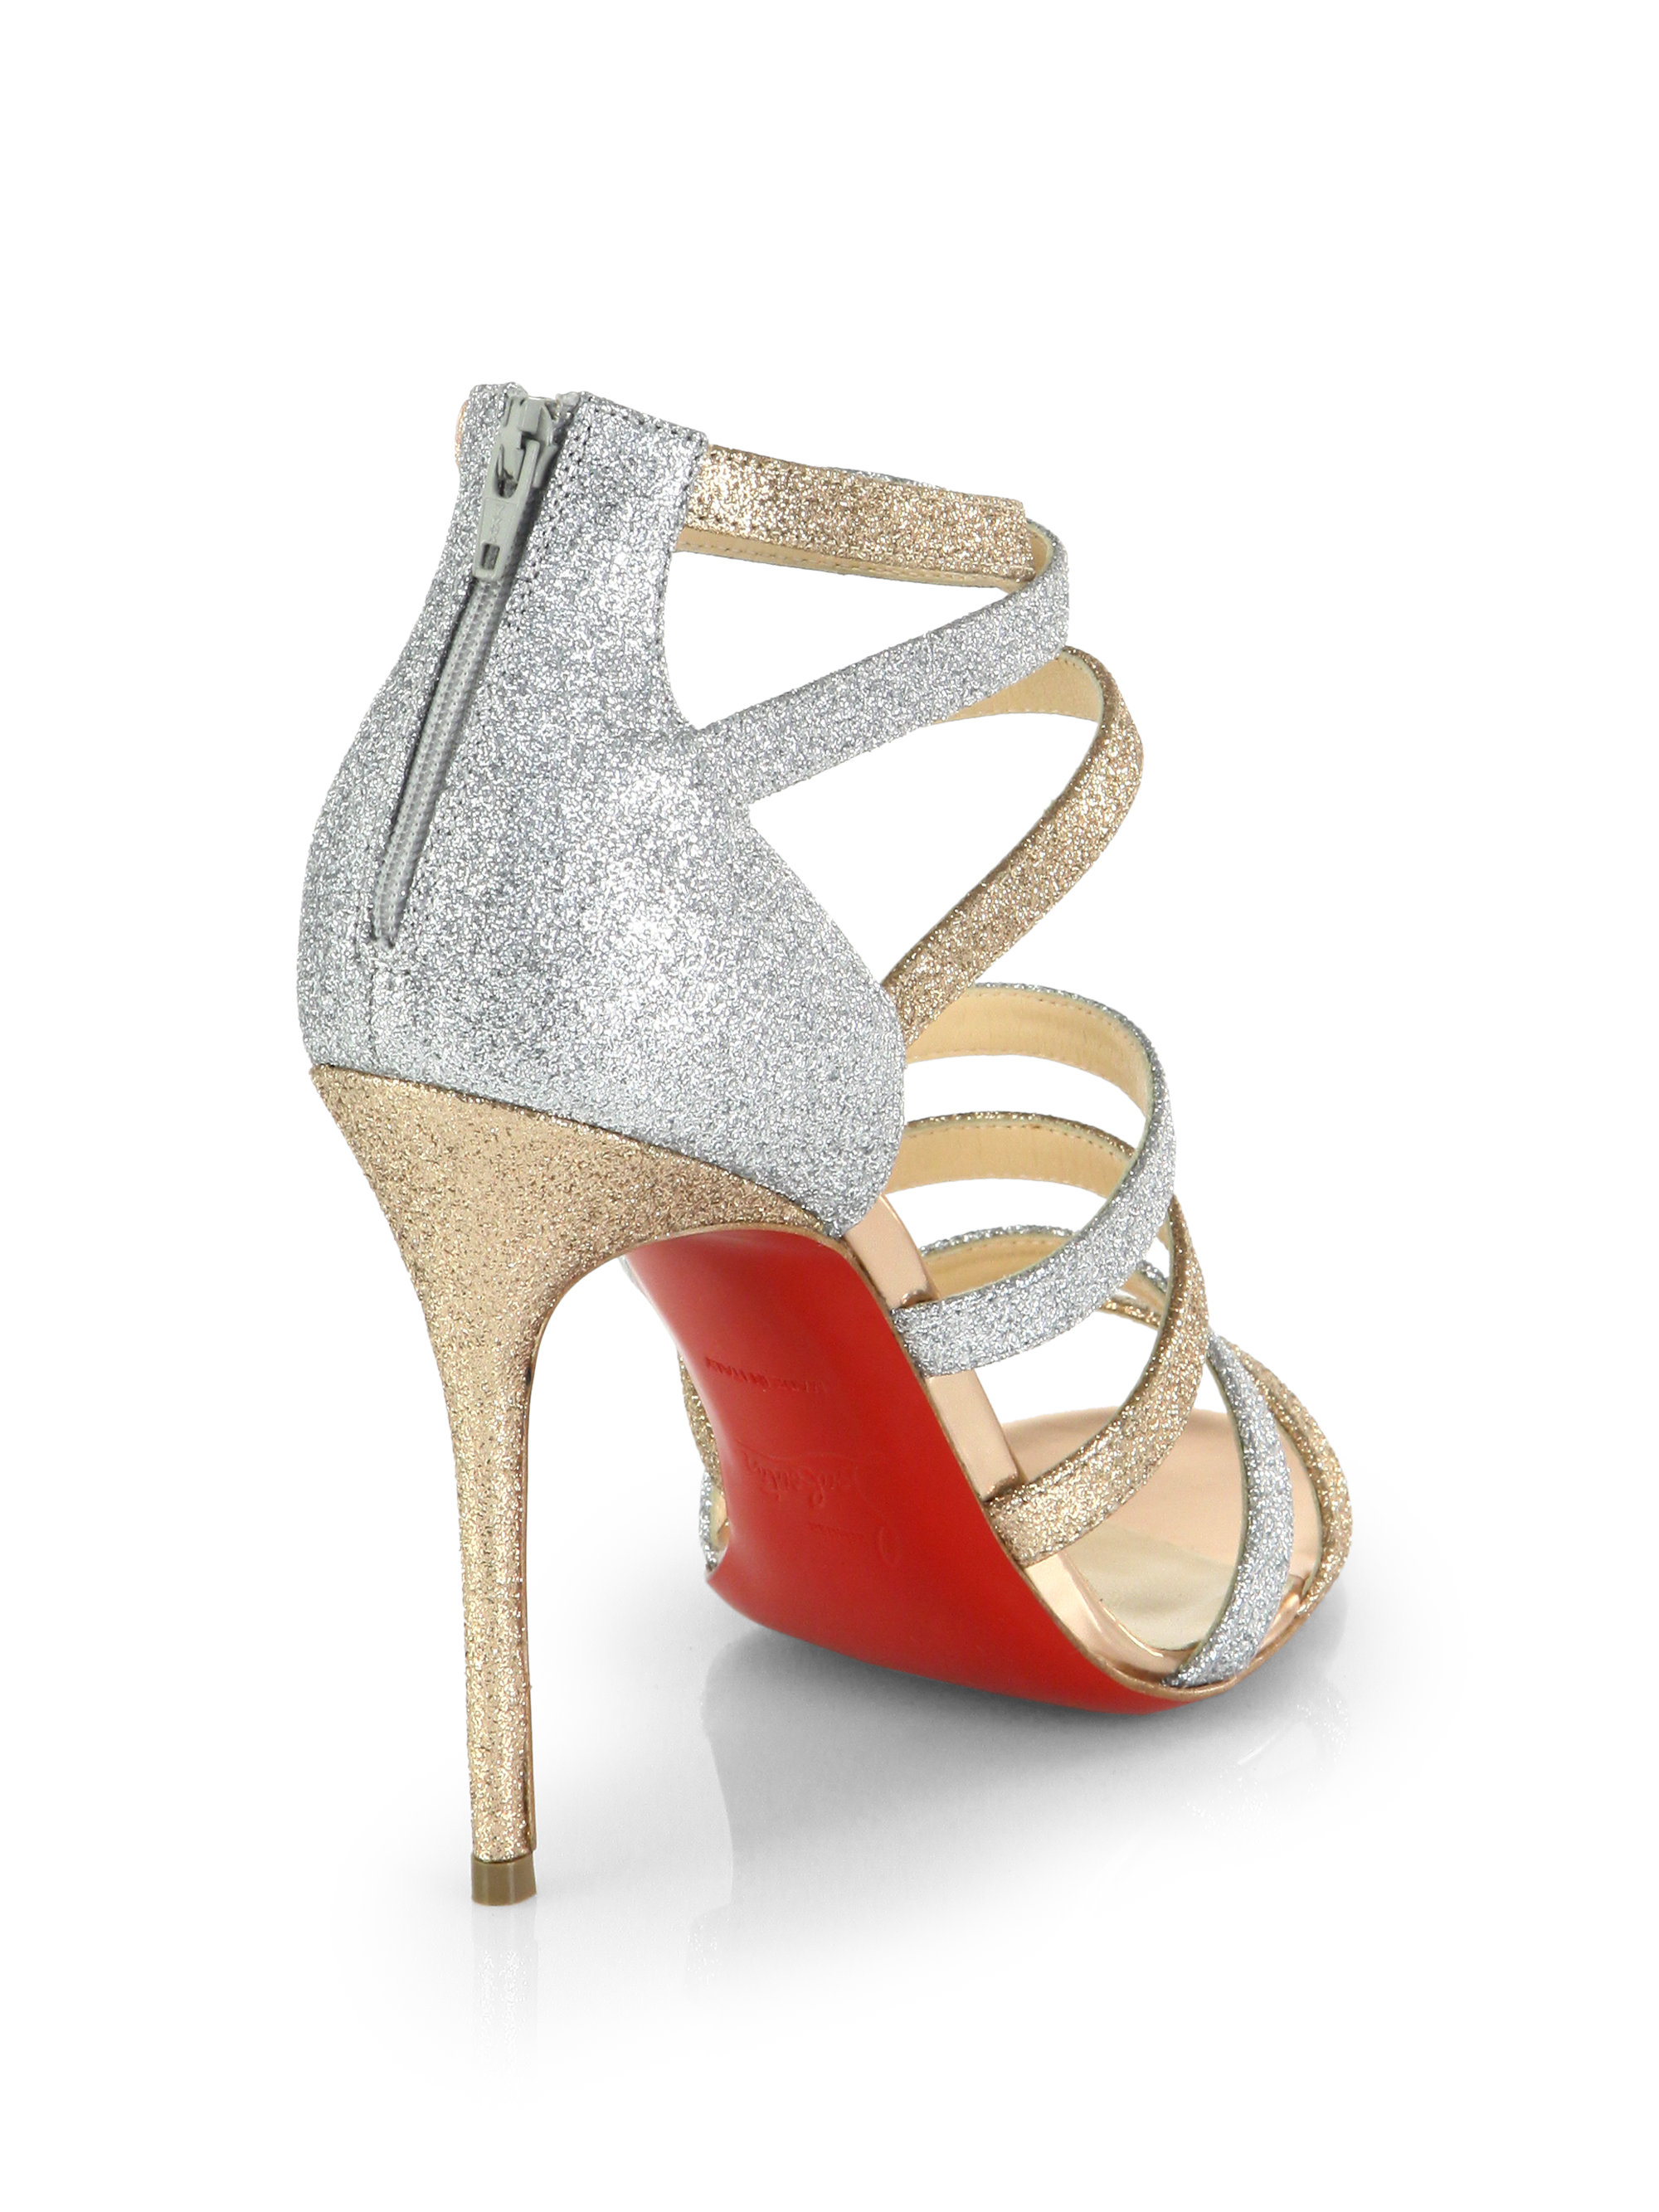 Christian Louboutin Marniere Strappy Glitter Sandals in Beige-Silver ...